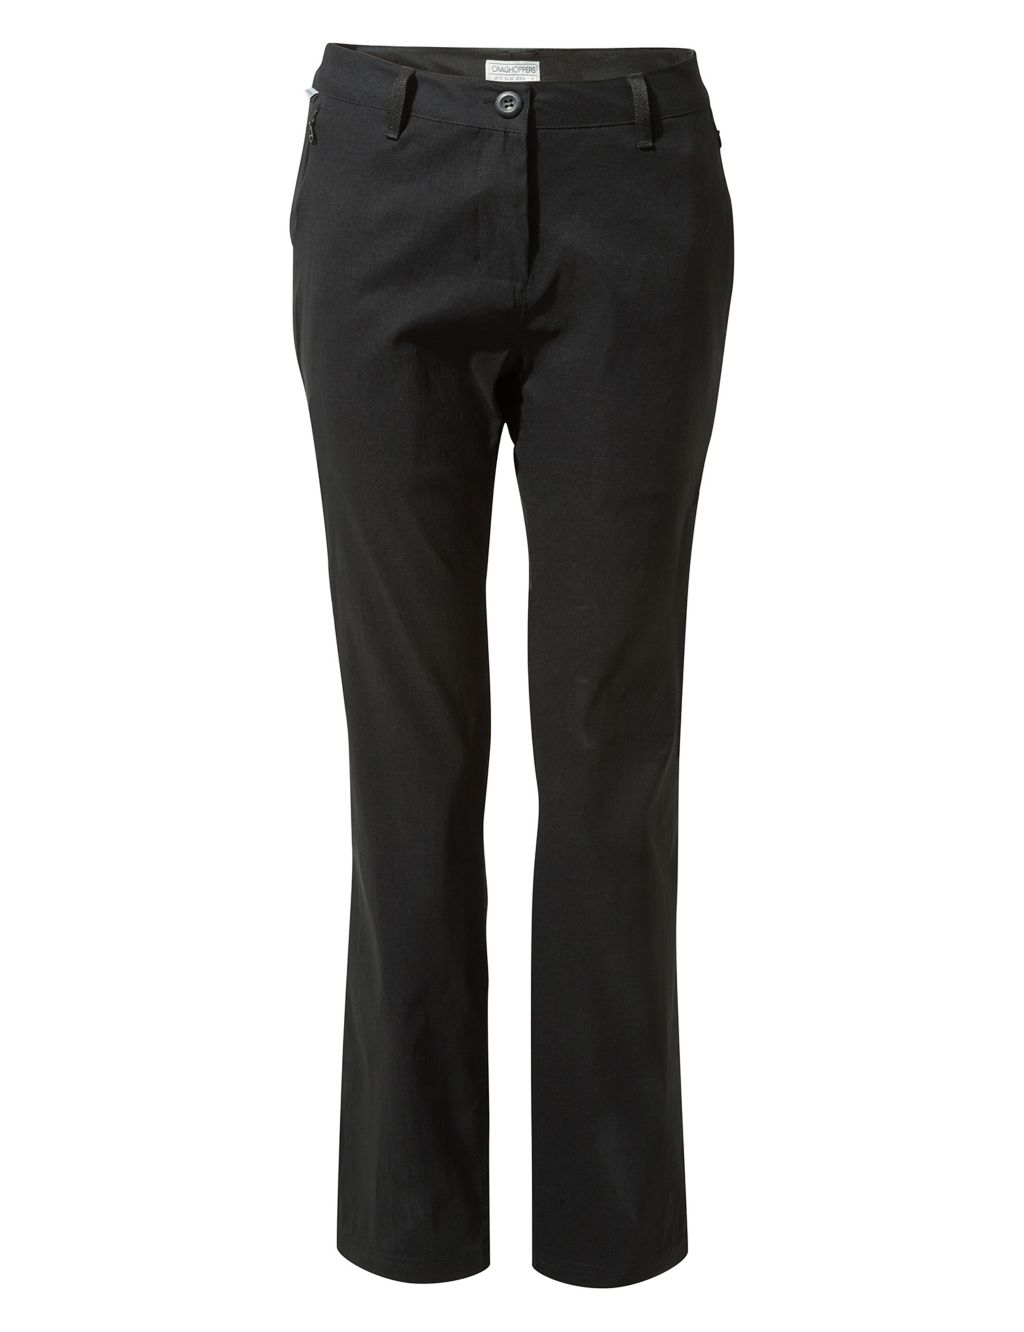 Kiwi Pro Tapered Trousers image 2